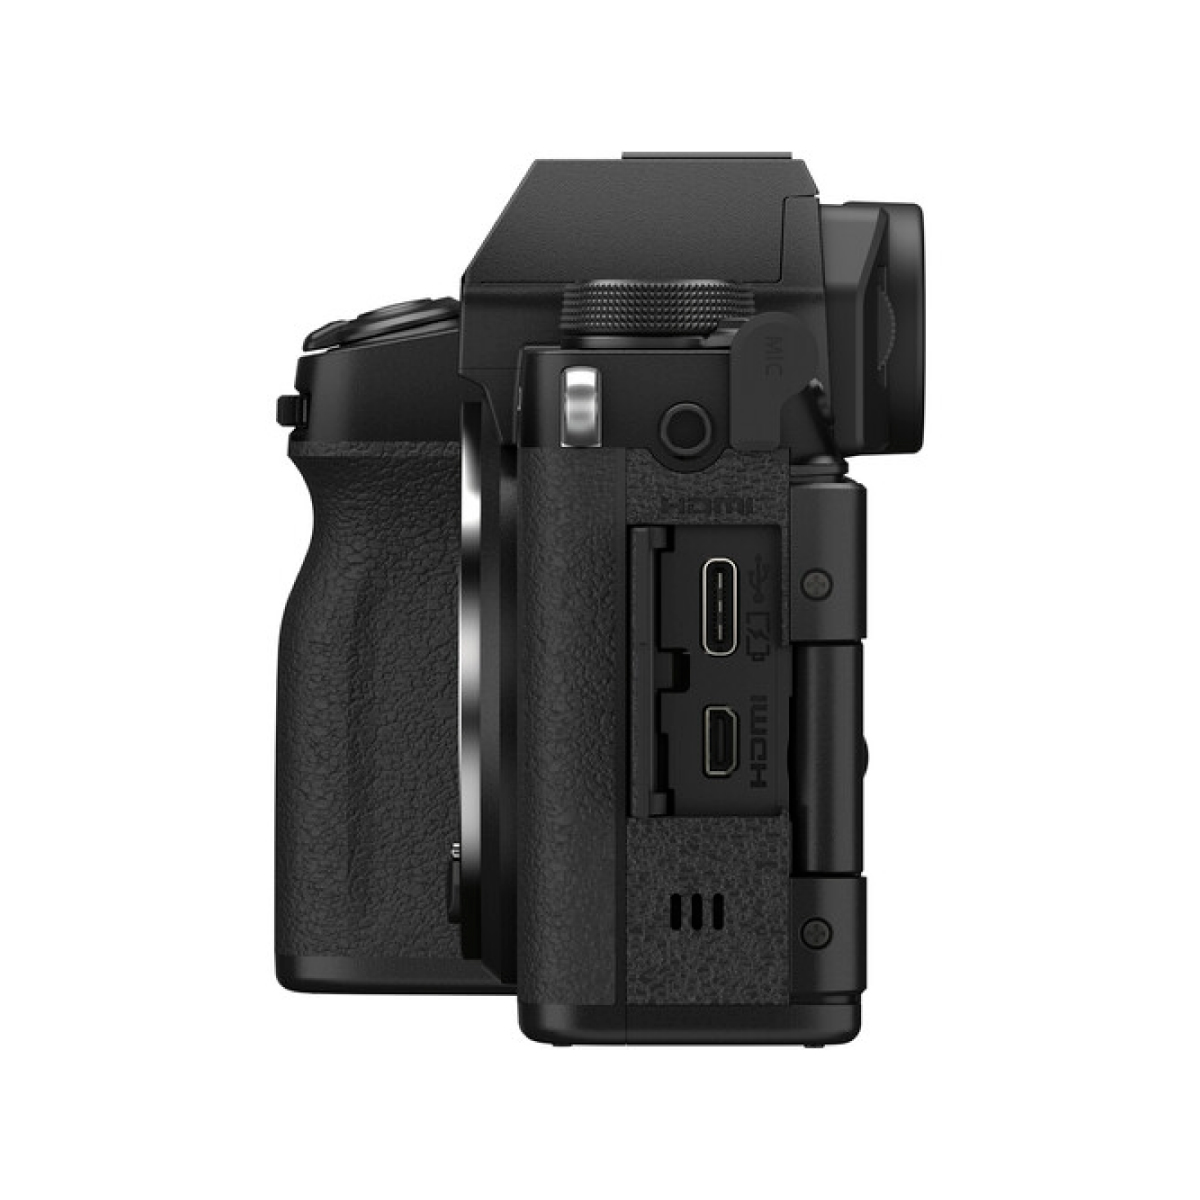 Fujifilm X-S10 Mirrorless Camera Body – Black (3)